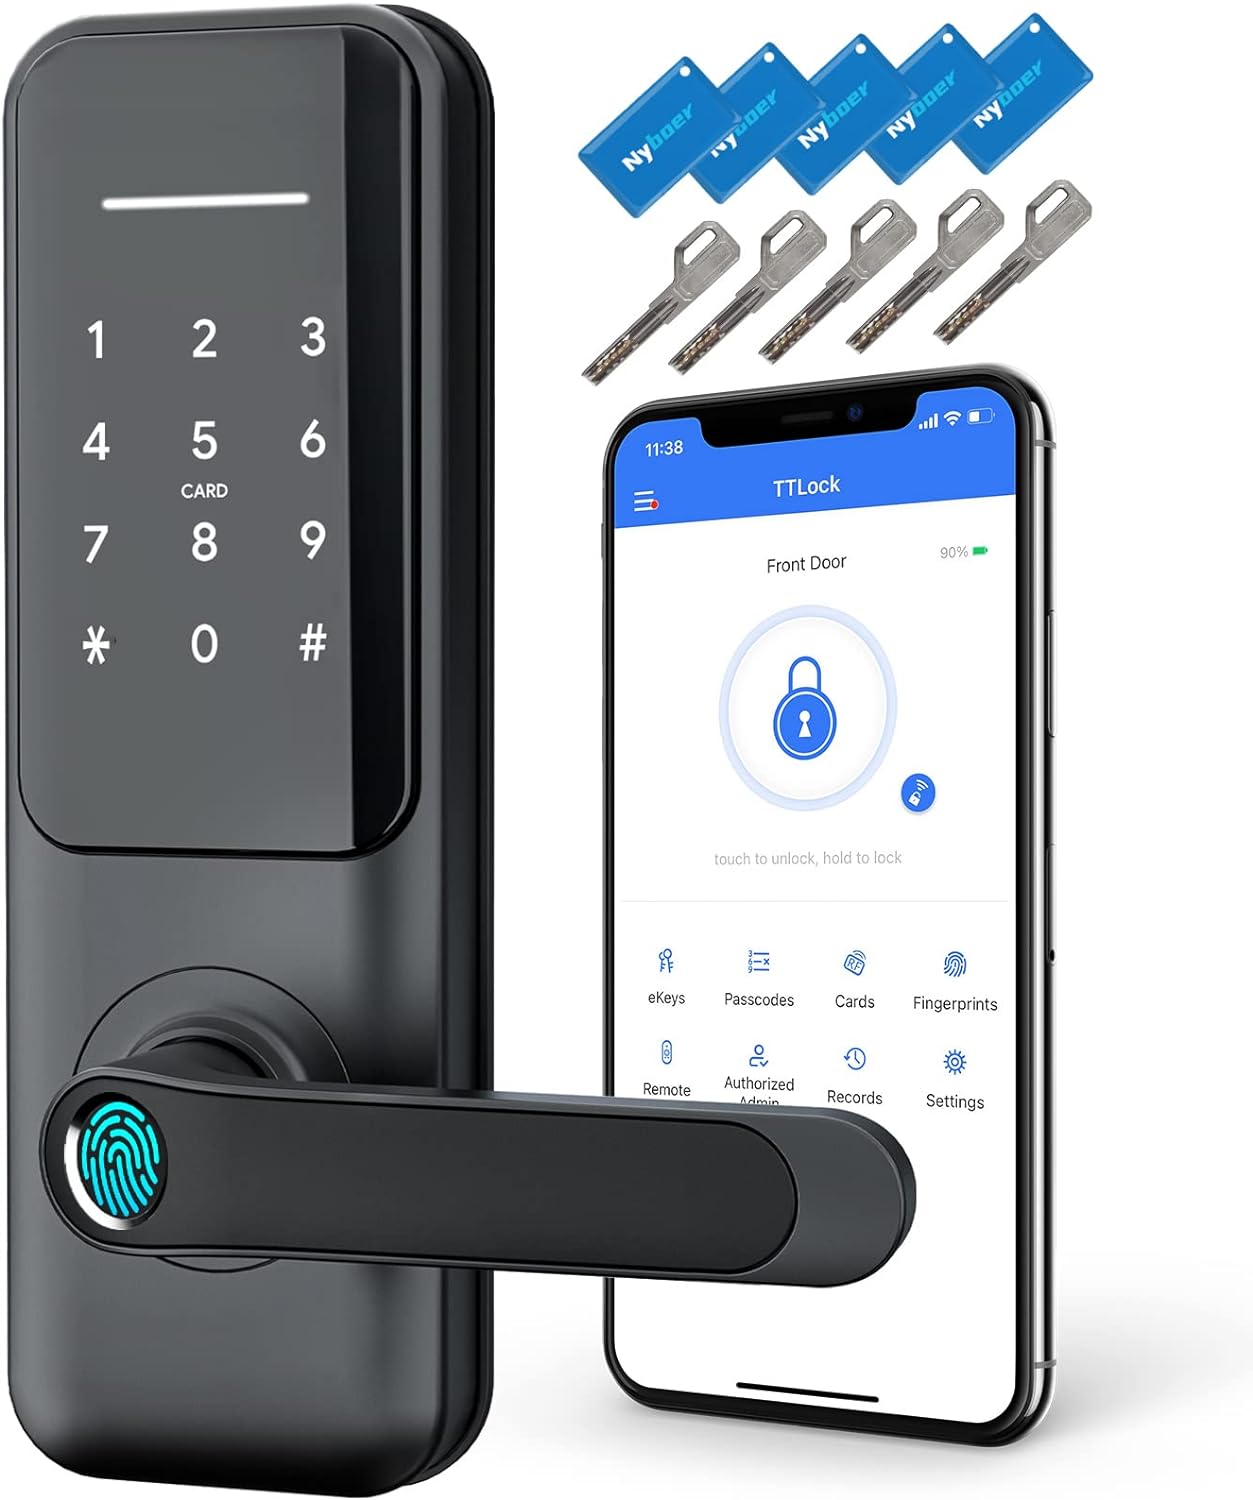 Smart door locks
                             Keyless entry locks
                             Home security technology 